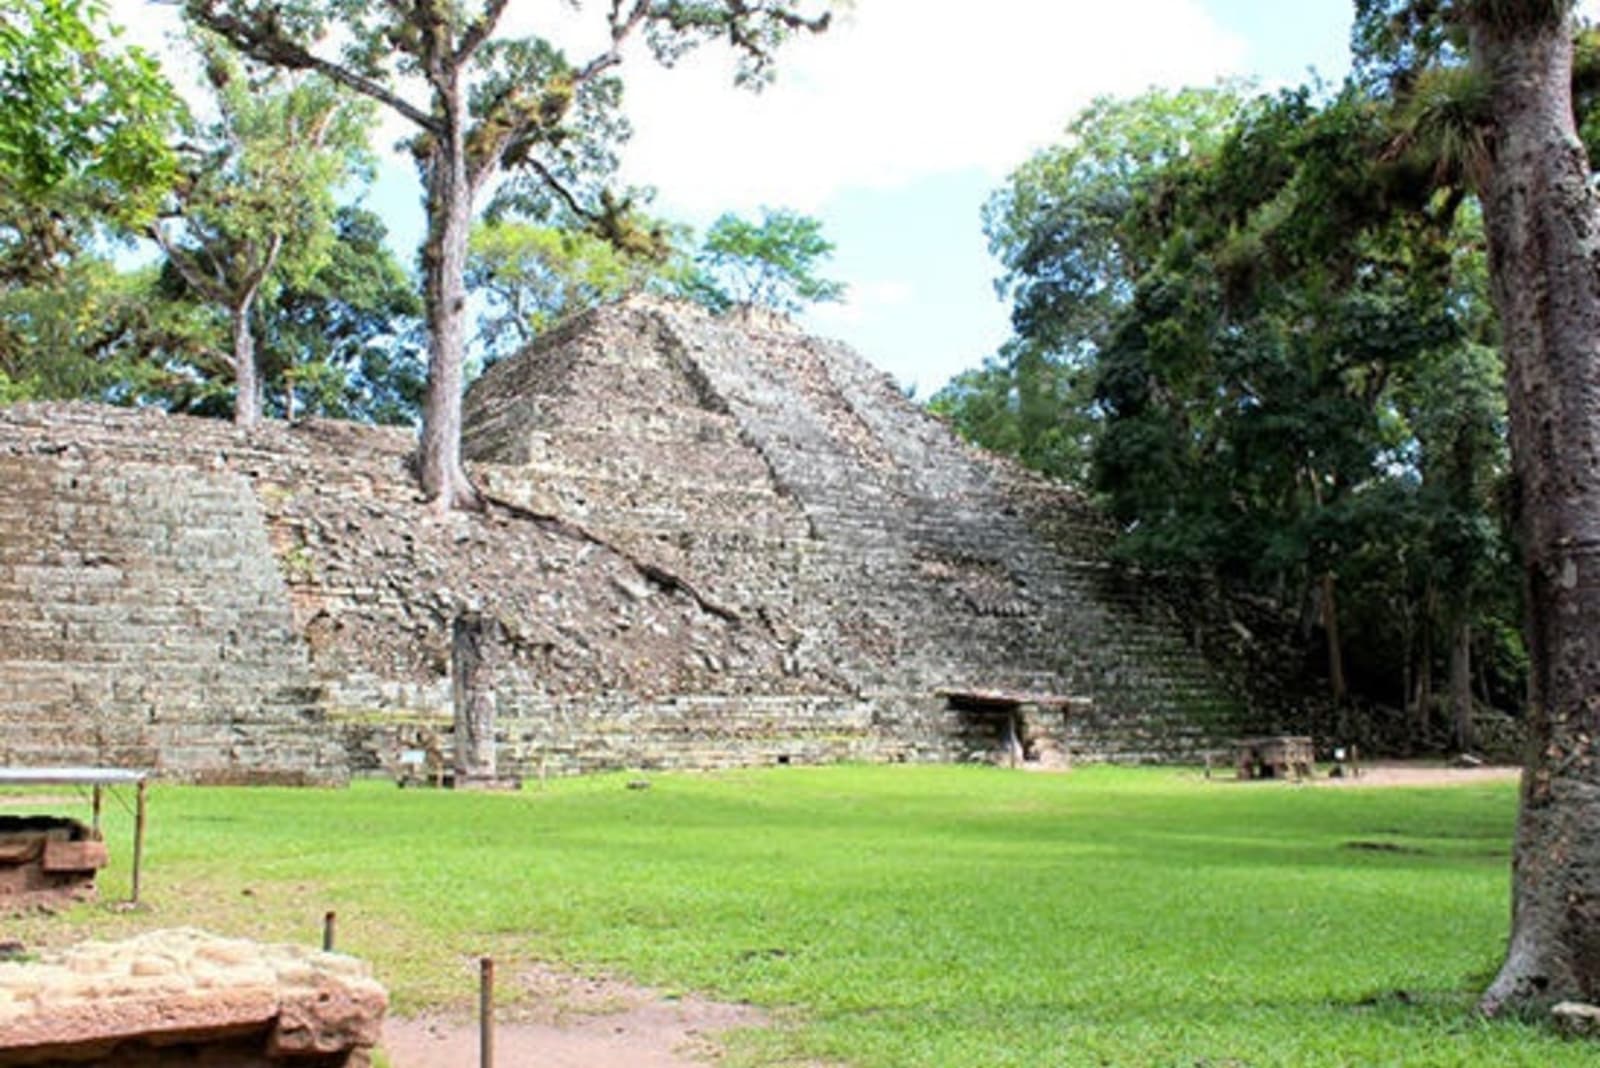 Copan Archaeological site in Honduras.